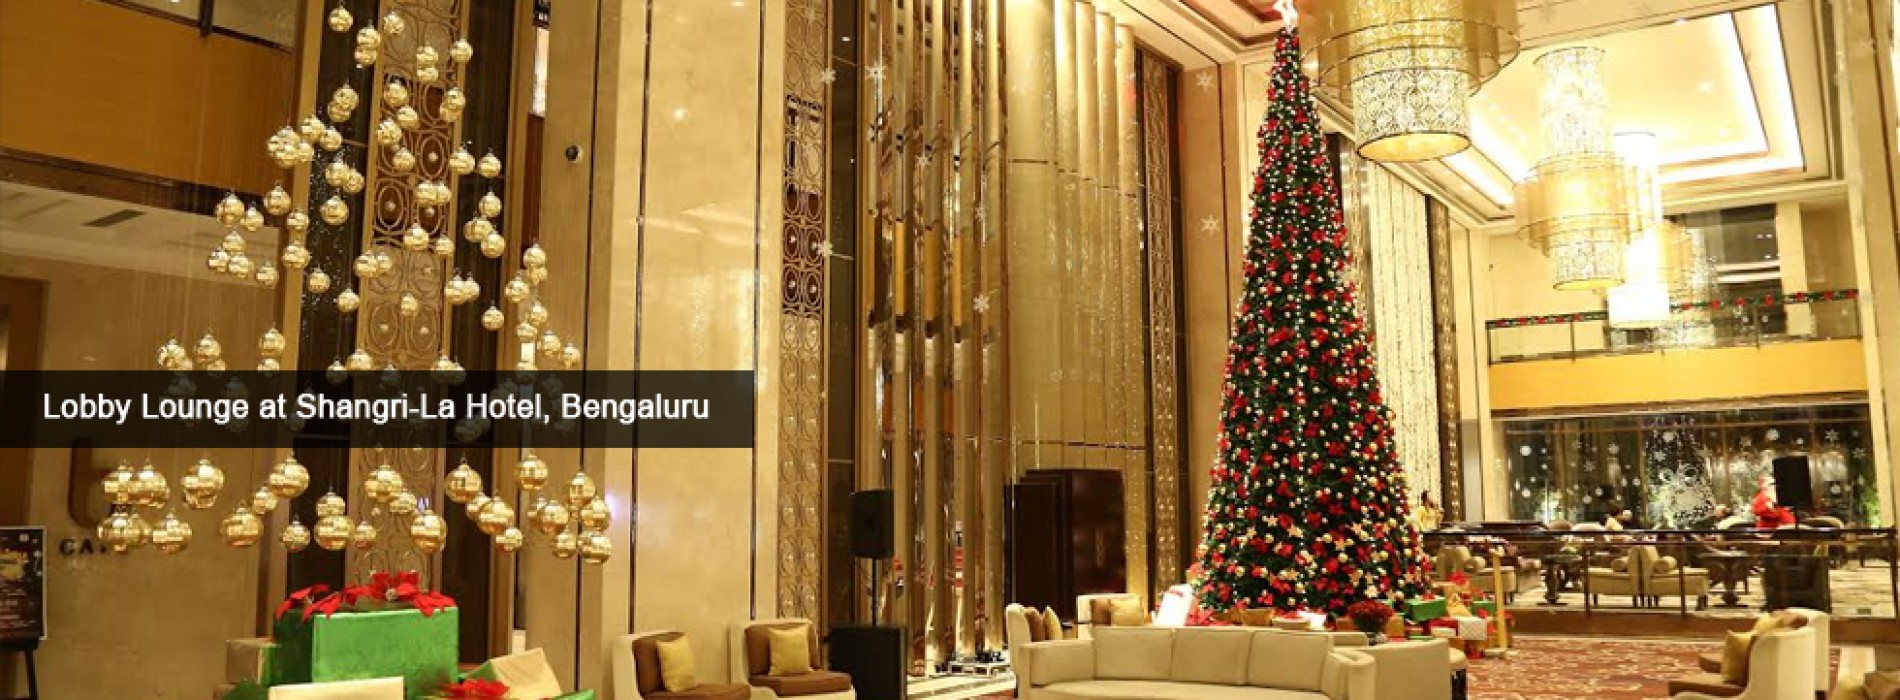 Shangri-La Hotel, Bengaluru lights up the Christmas Charity Tree